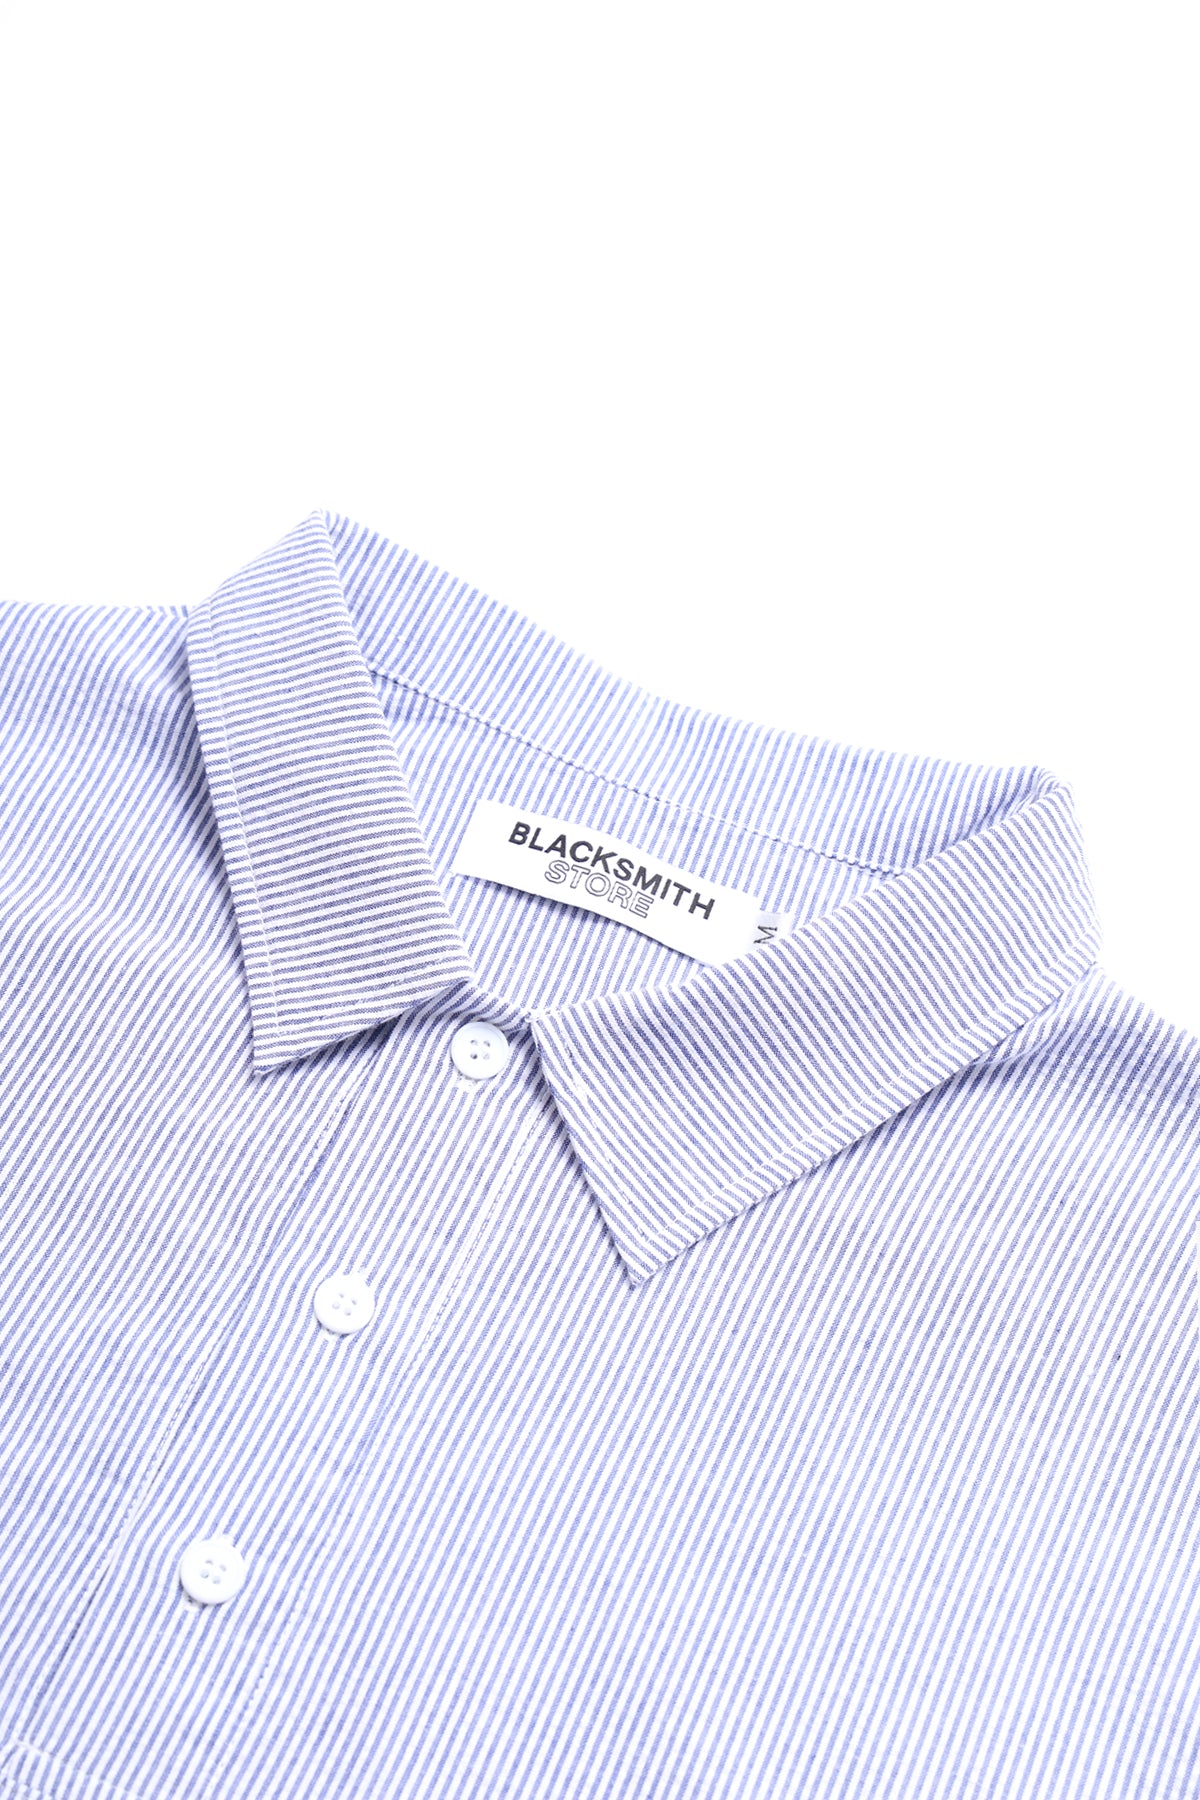 Blacksmith - Short Sleeved Popover Shirt - Blue Seersucker